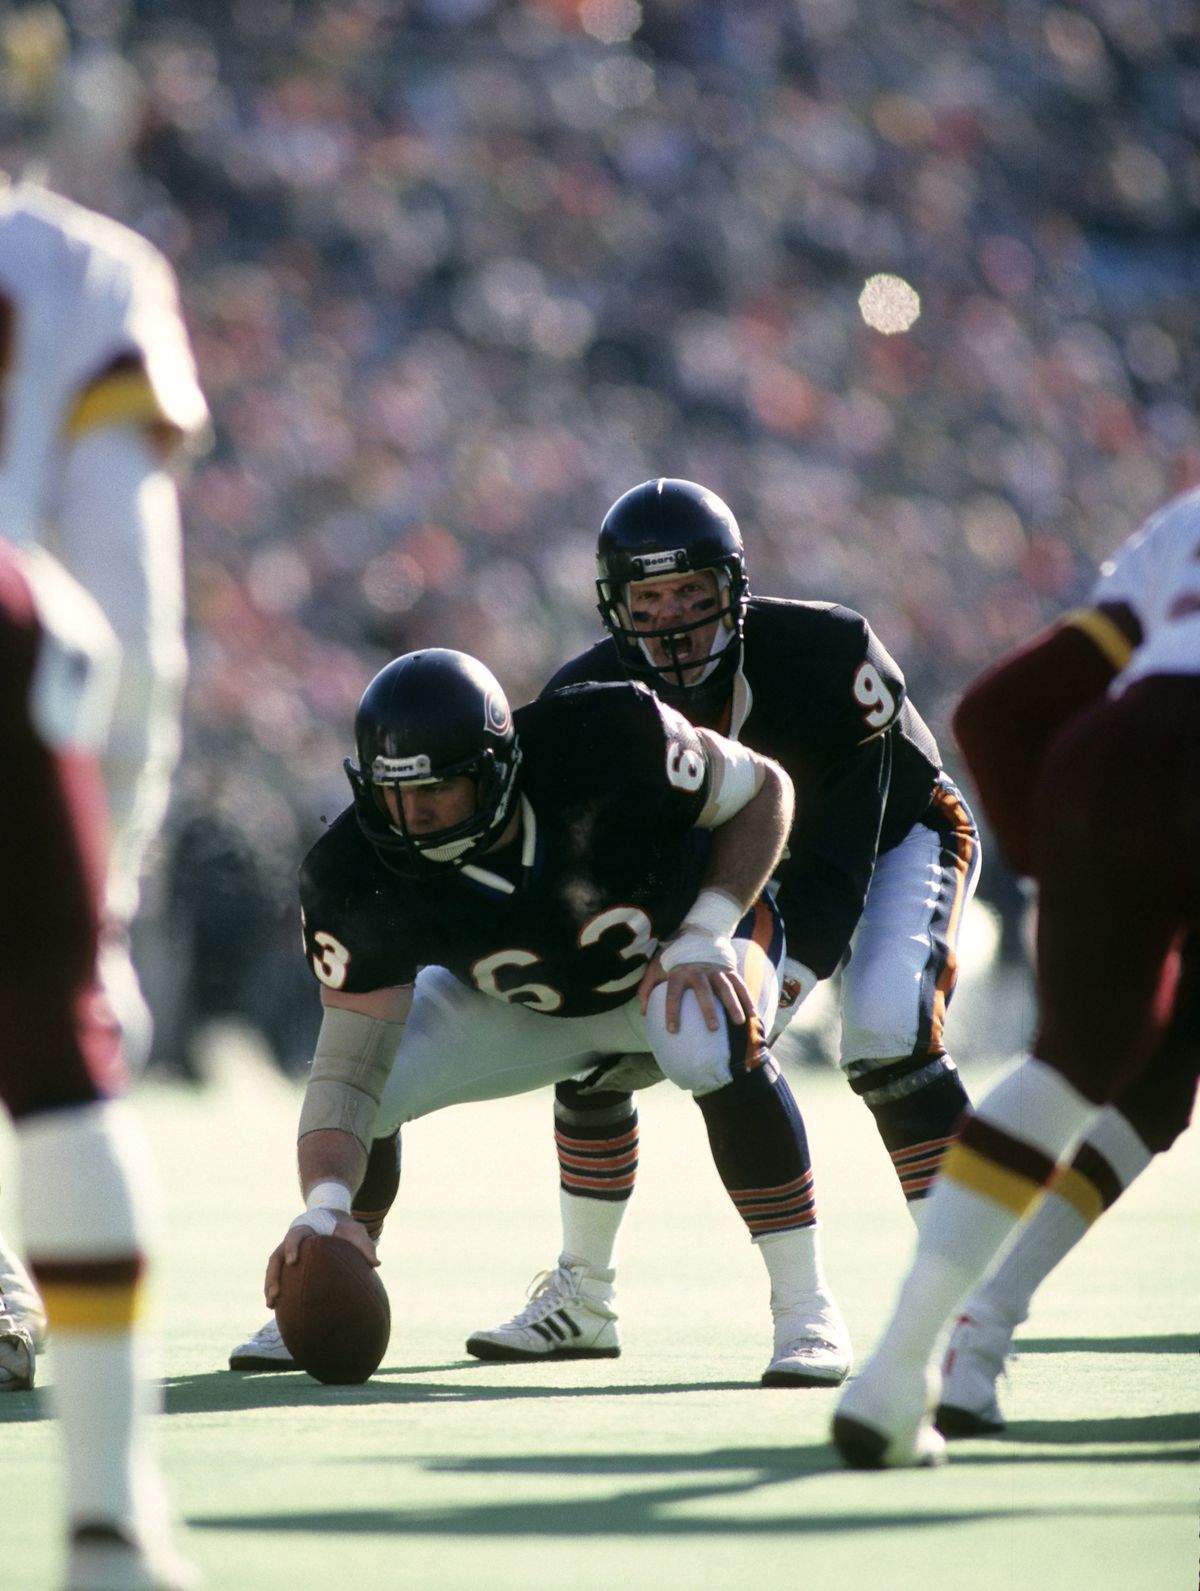 1987 NFC Divisional Playoff Game - Washington Redskins vs Chicago Bears - January 10, 1988